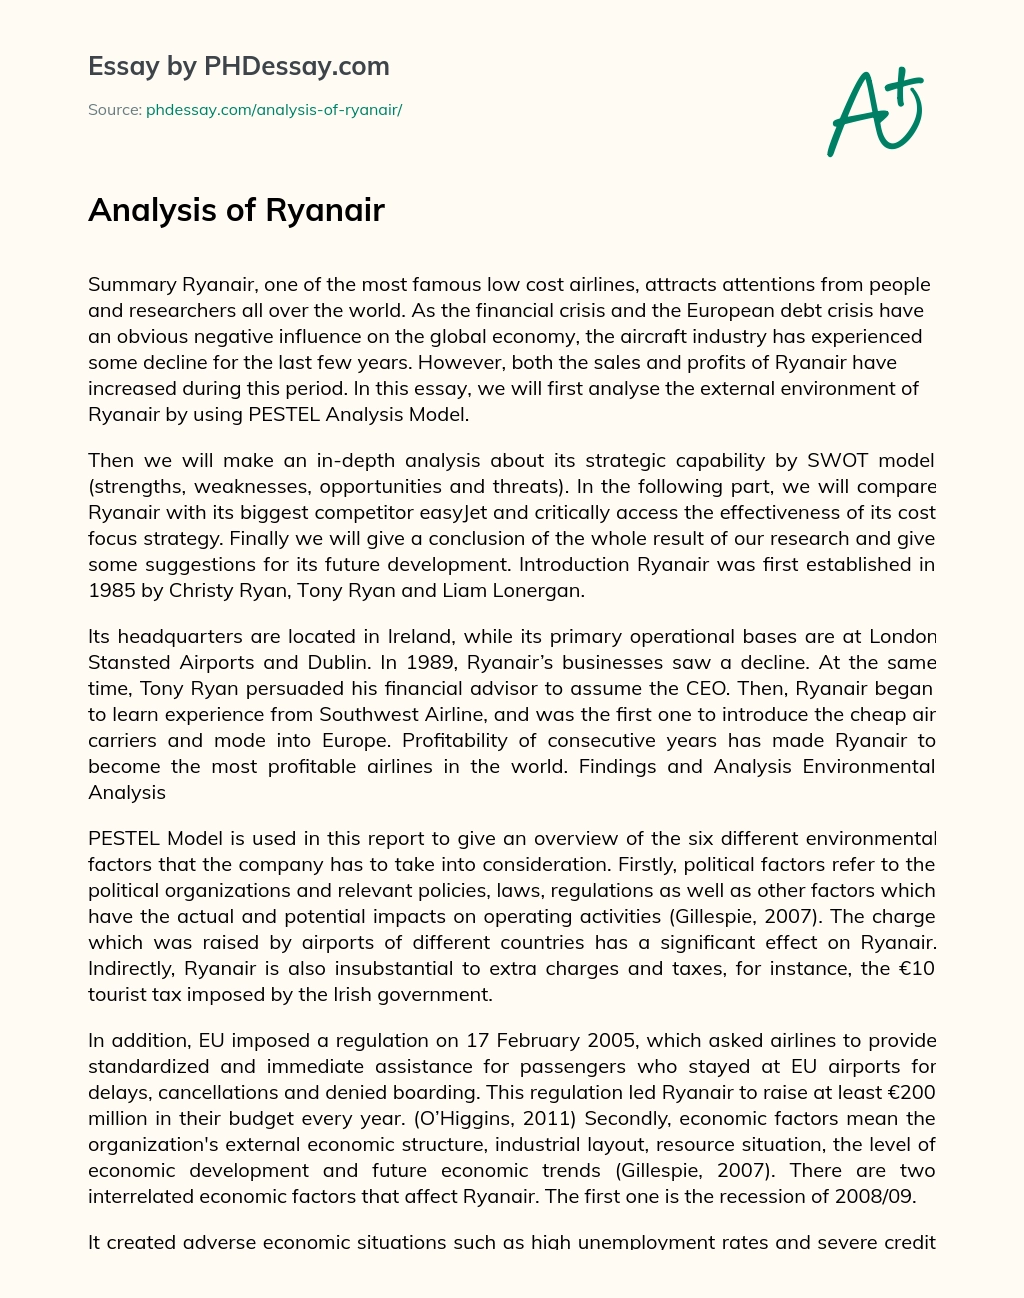 Analysis of Ryanair essay